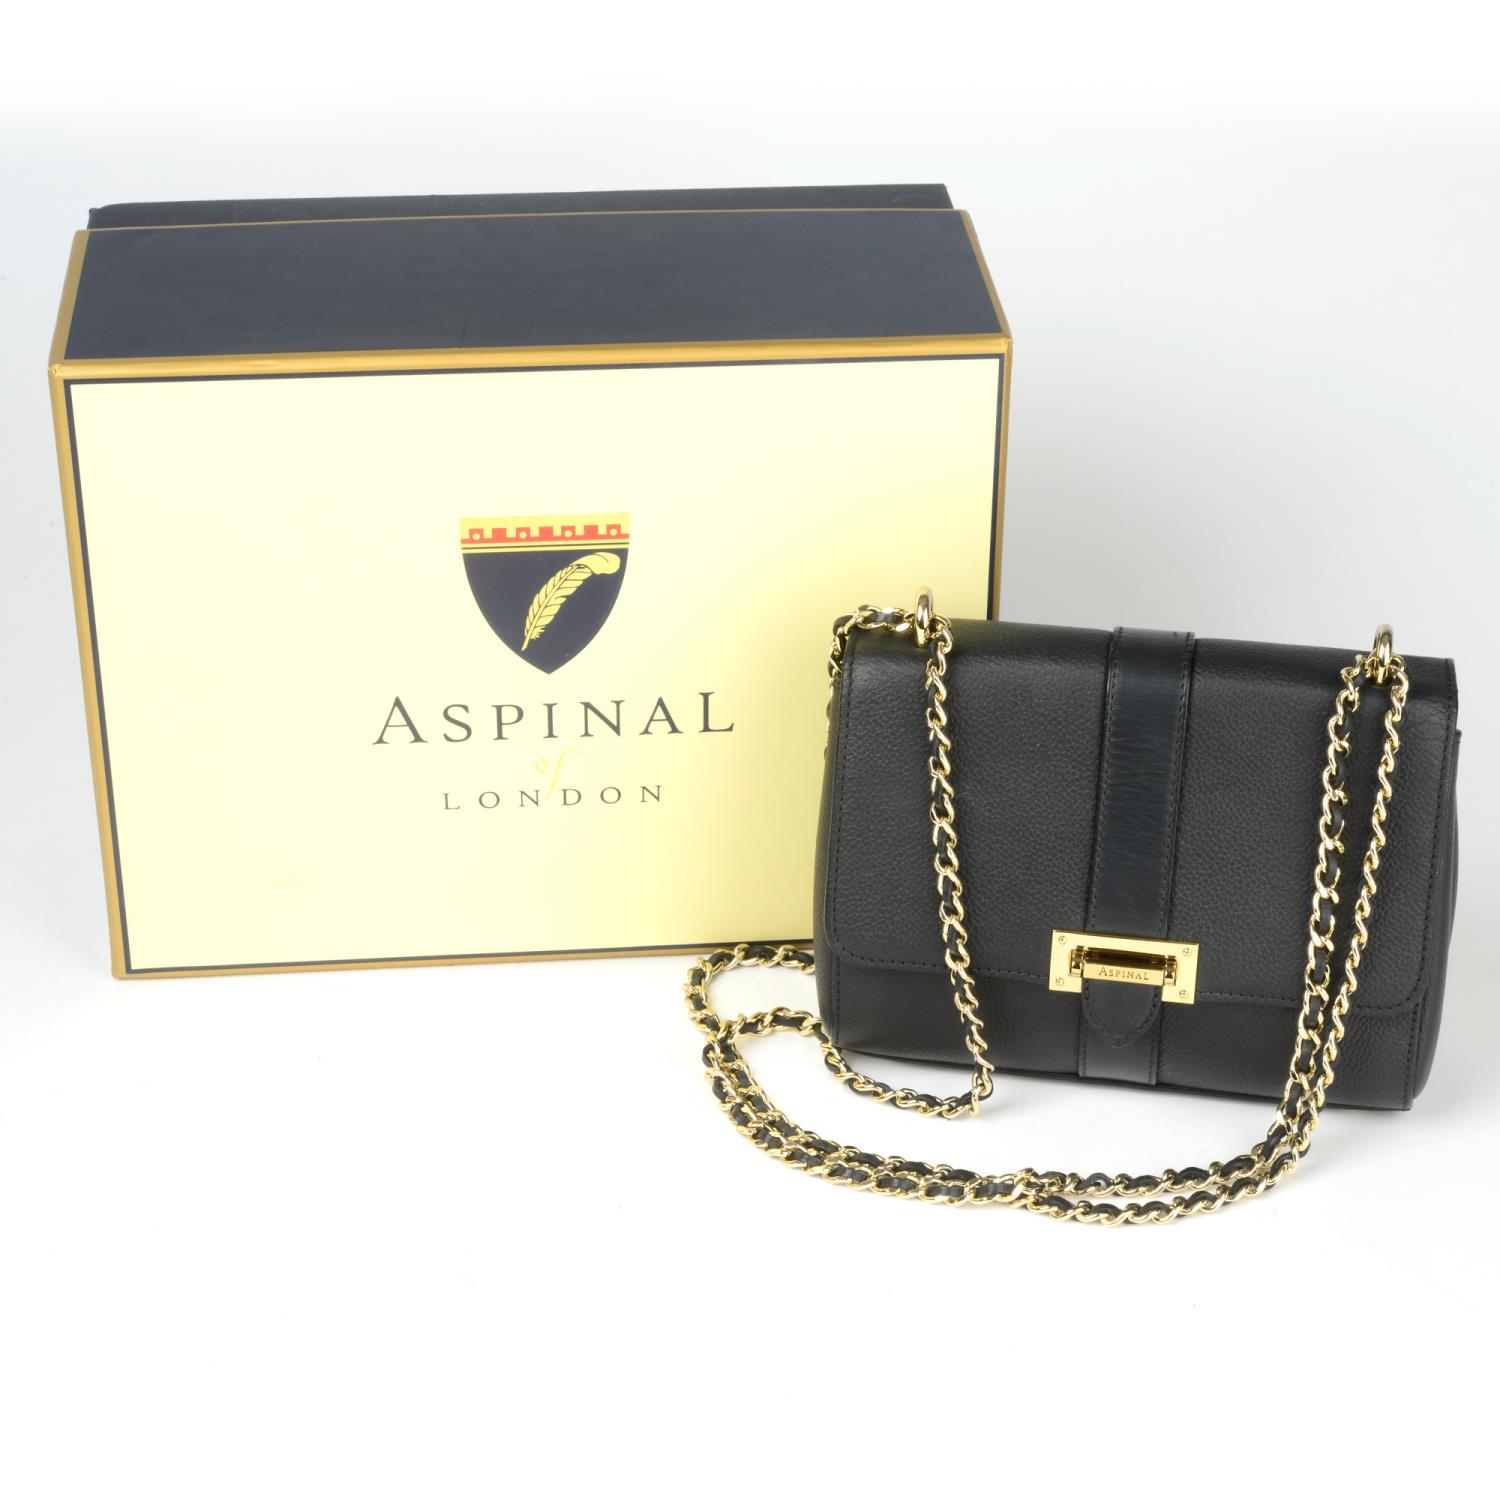 ASPINAL LONDON - a black leather Lottie handbag. - Image 4 of 4